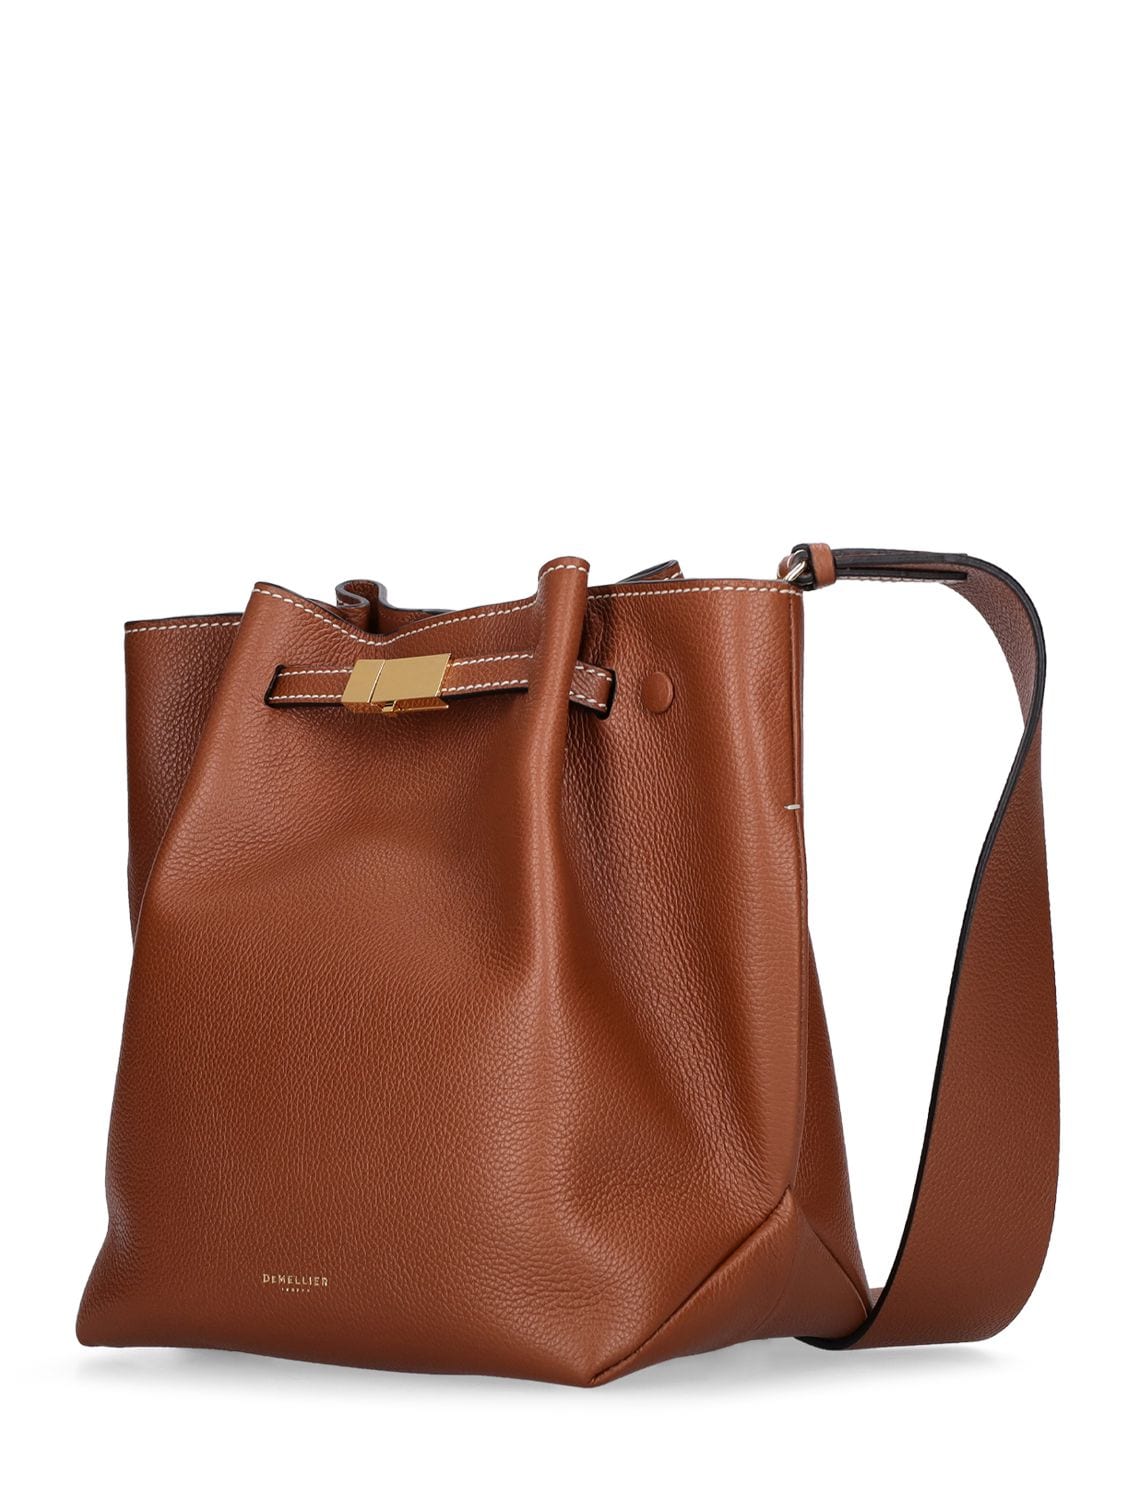 Demellier New York Bucket Grain Leather Bag In Tan | ModeSens